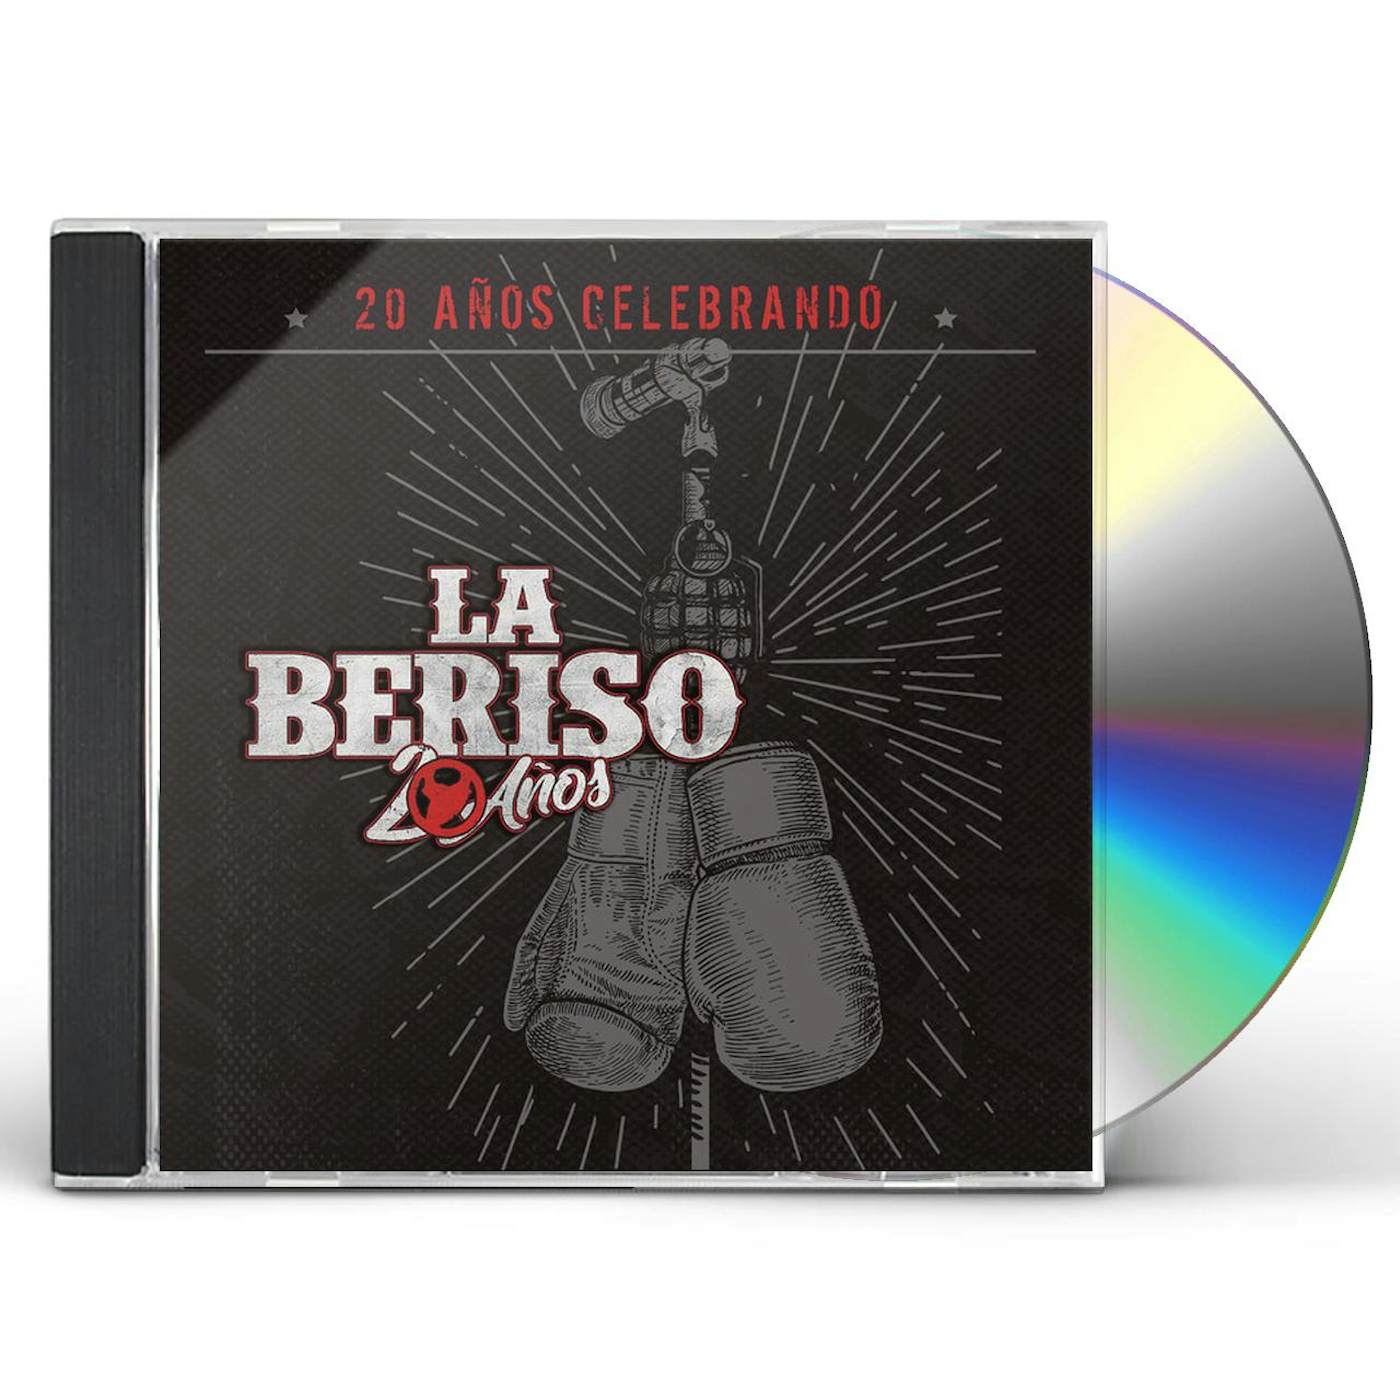 La Beriso 20 ANOS CELEBRANDO CD